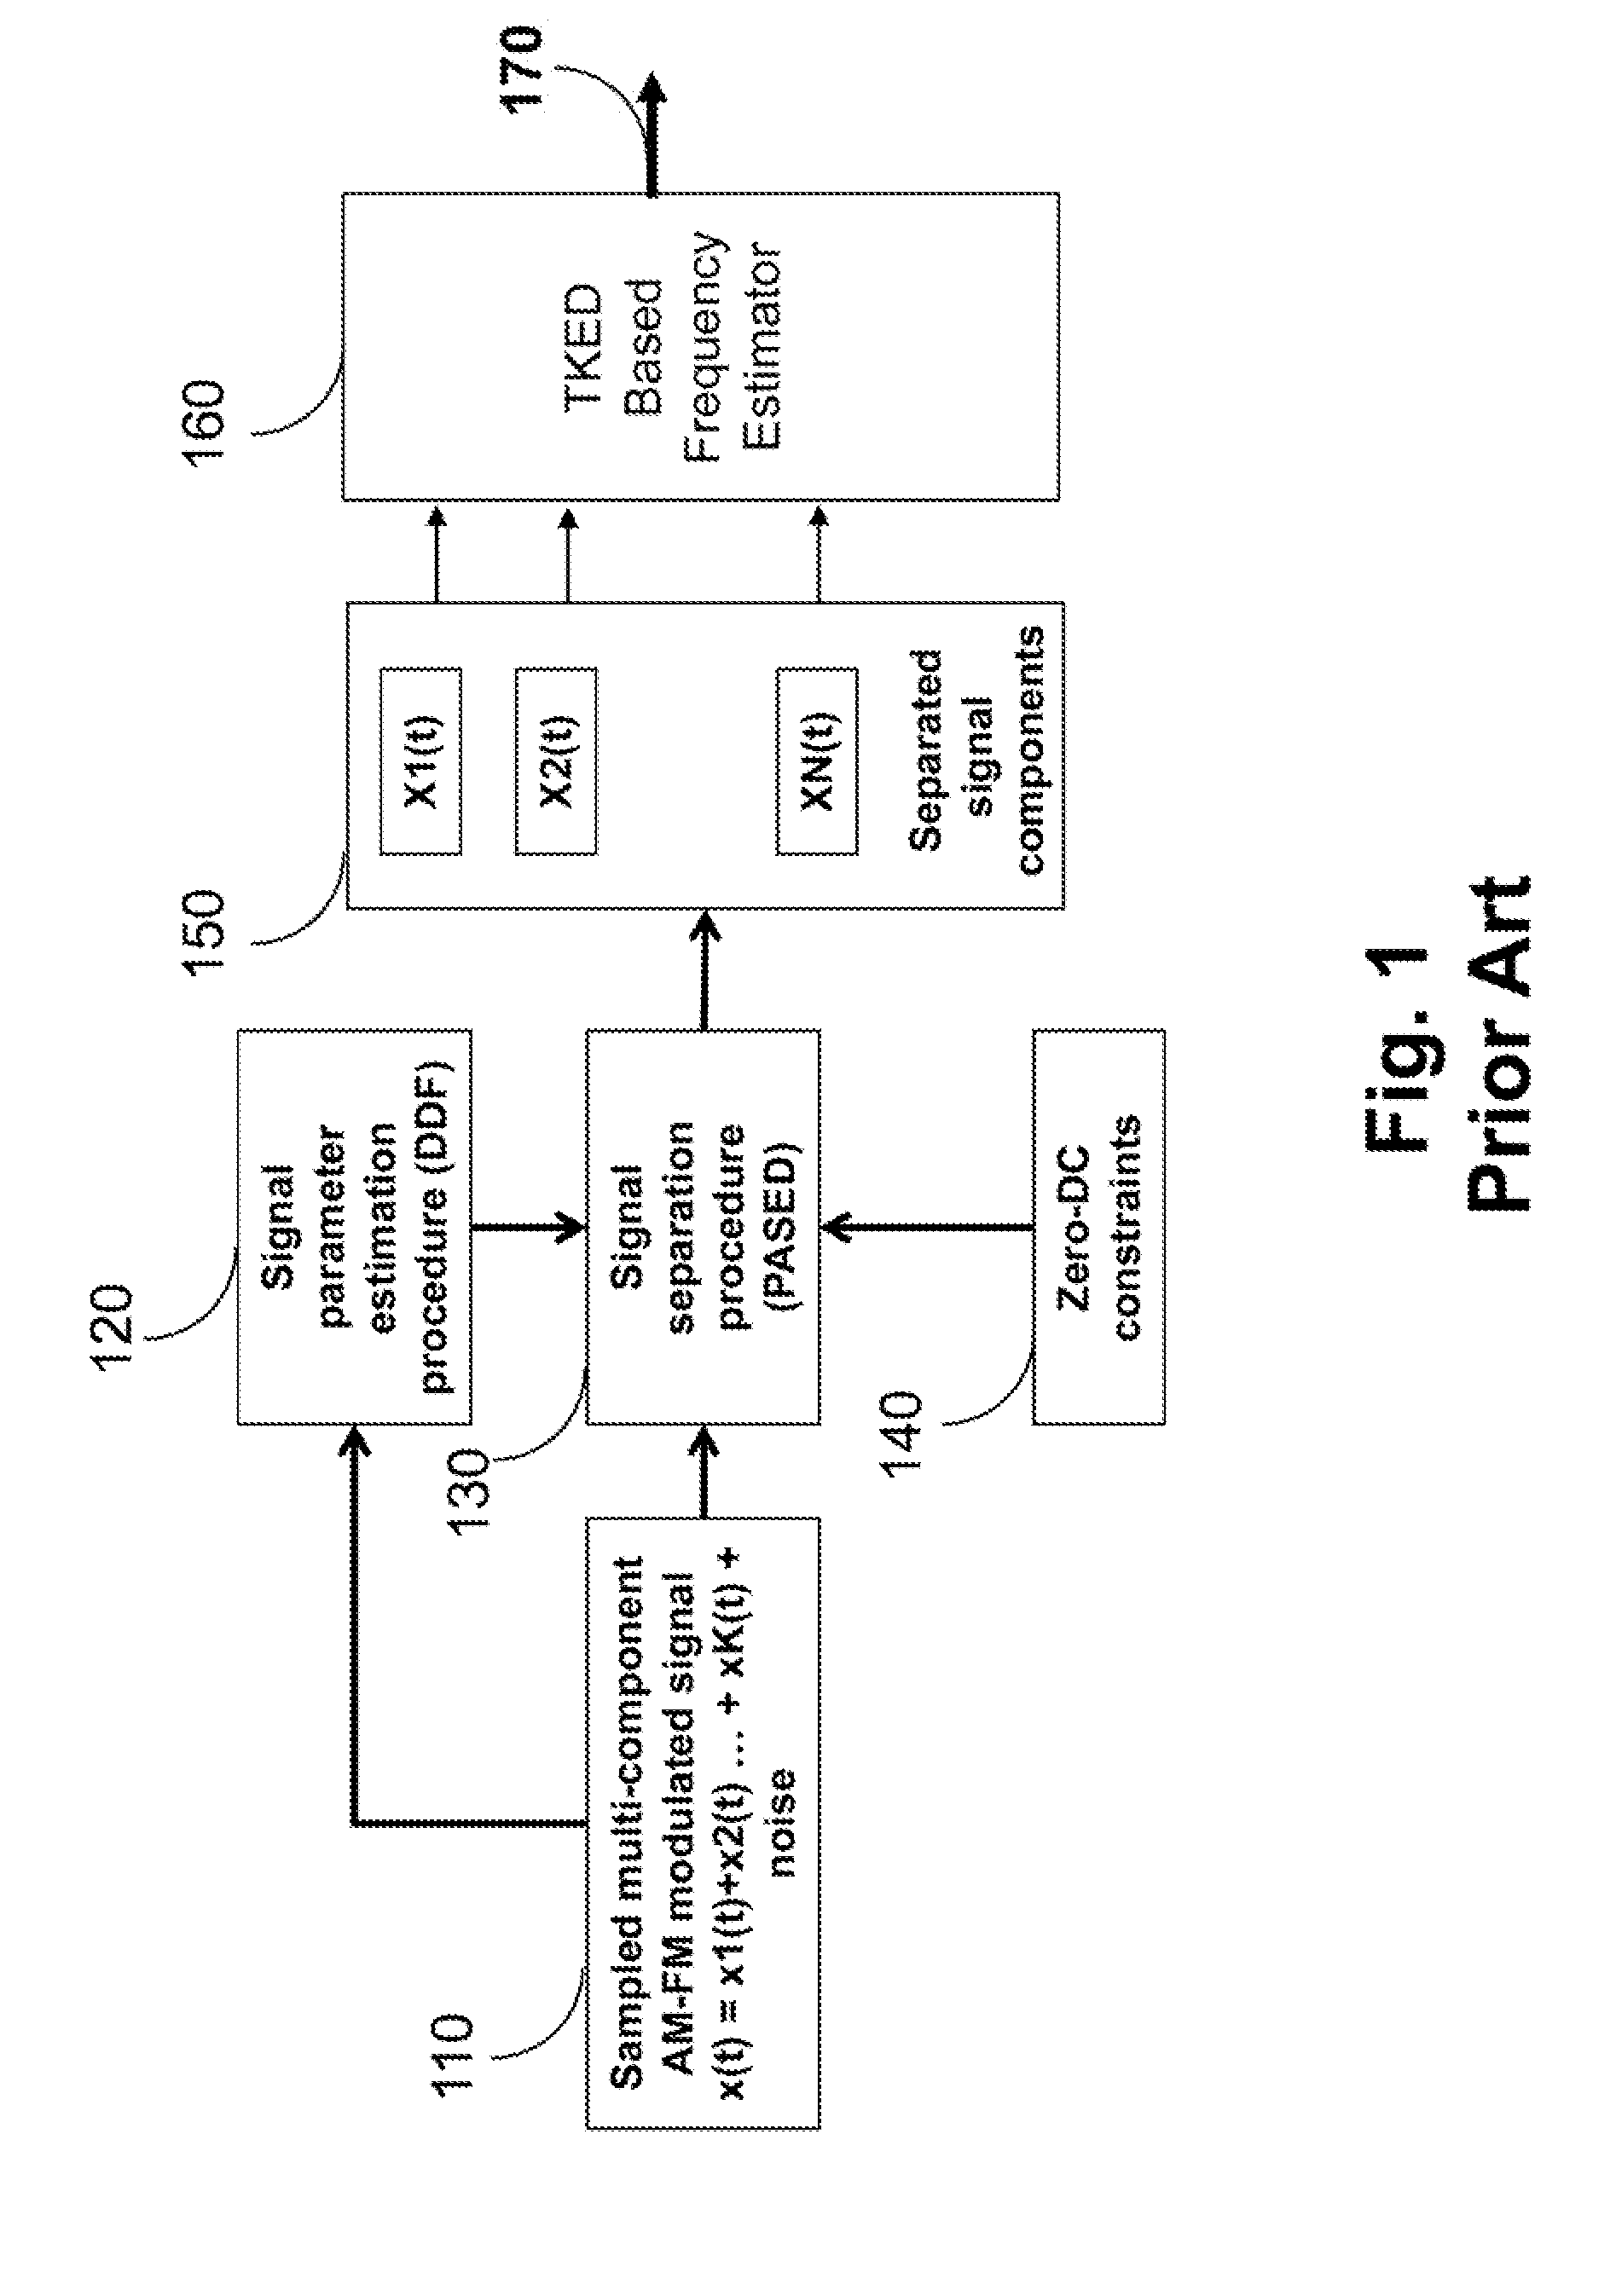 Method for Separating Multi-Component Signals